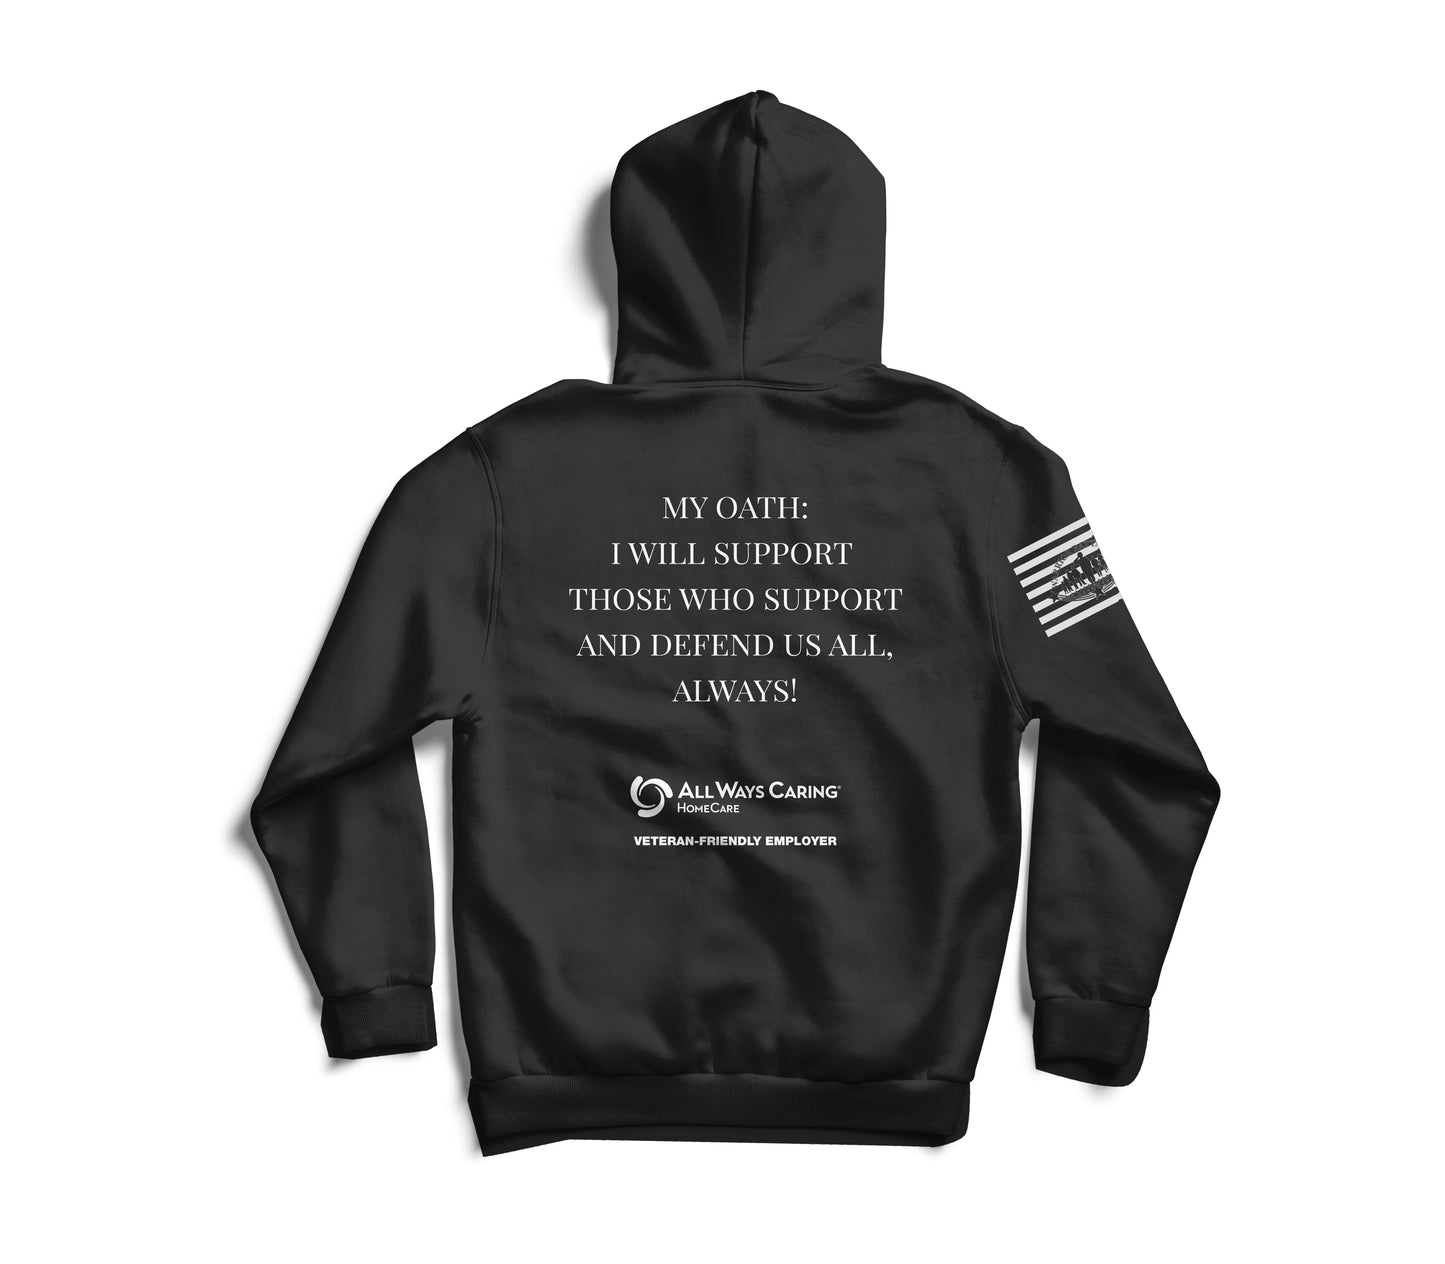 All Ways Caring Team - My Oath Neutral Hooded Sweatshirts - Black - White Print